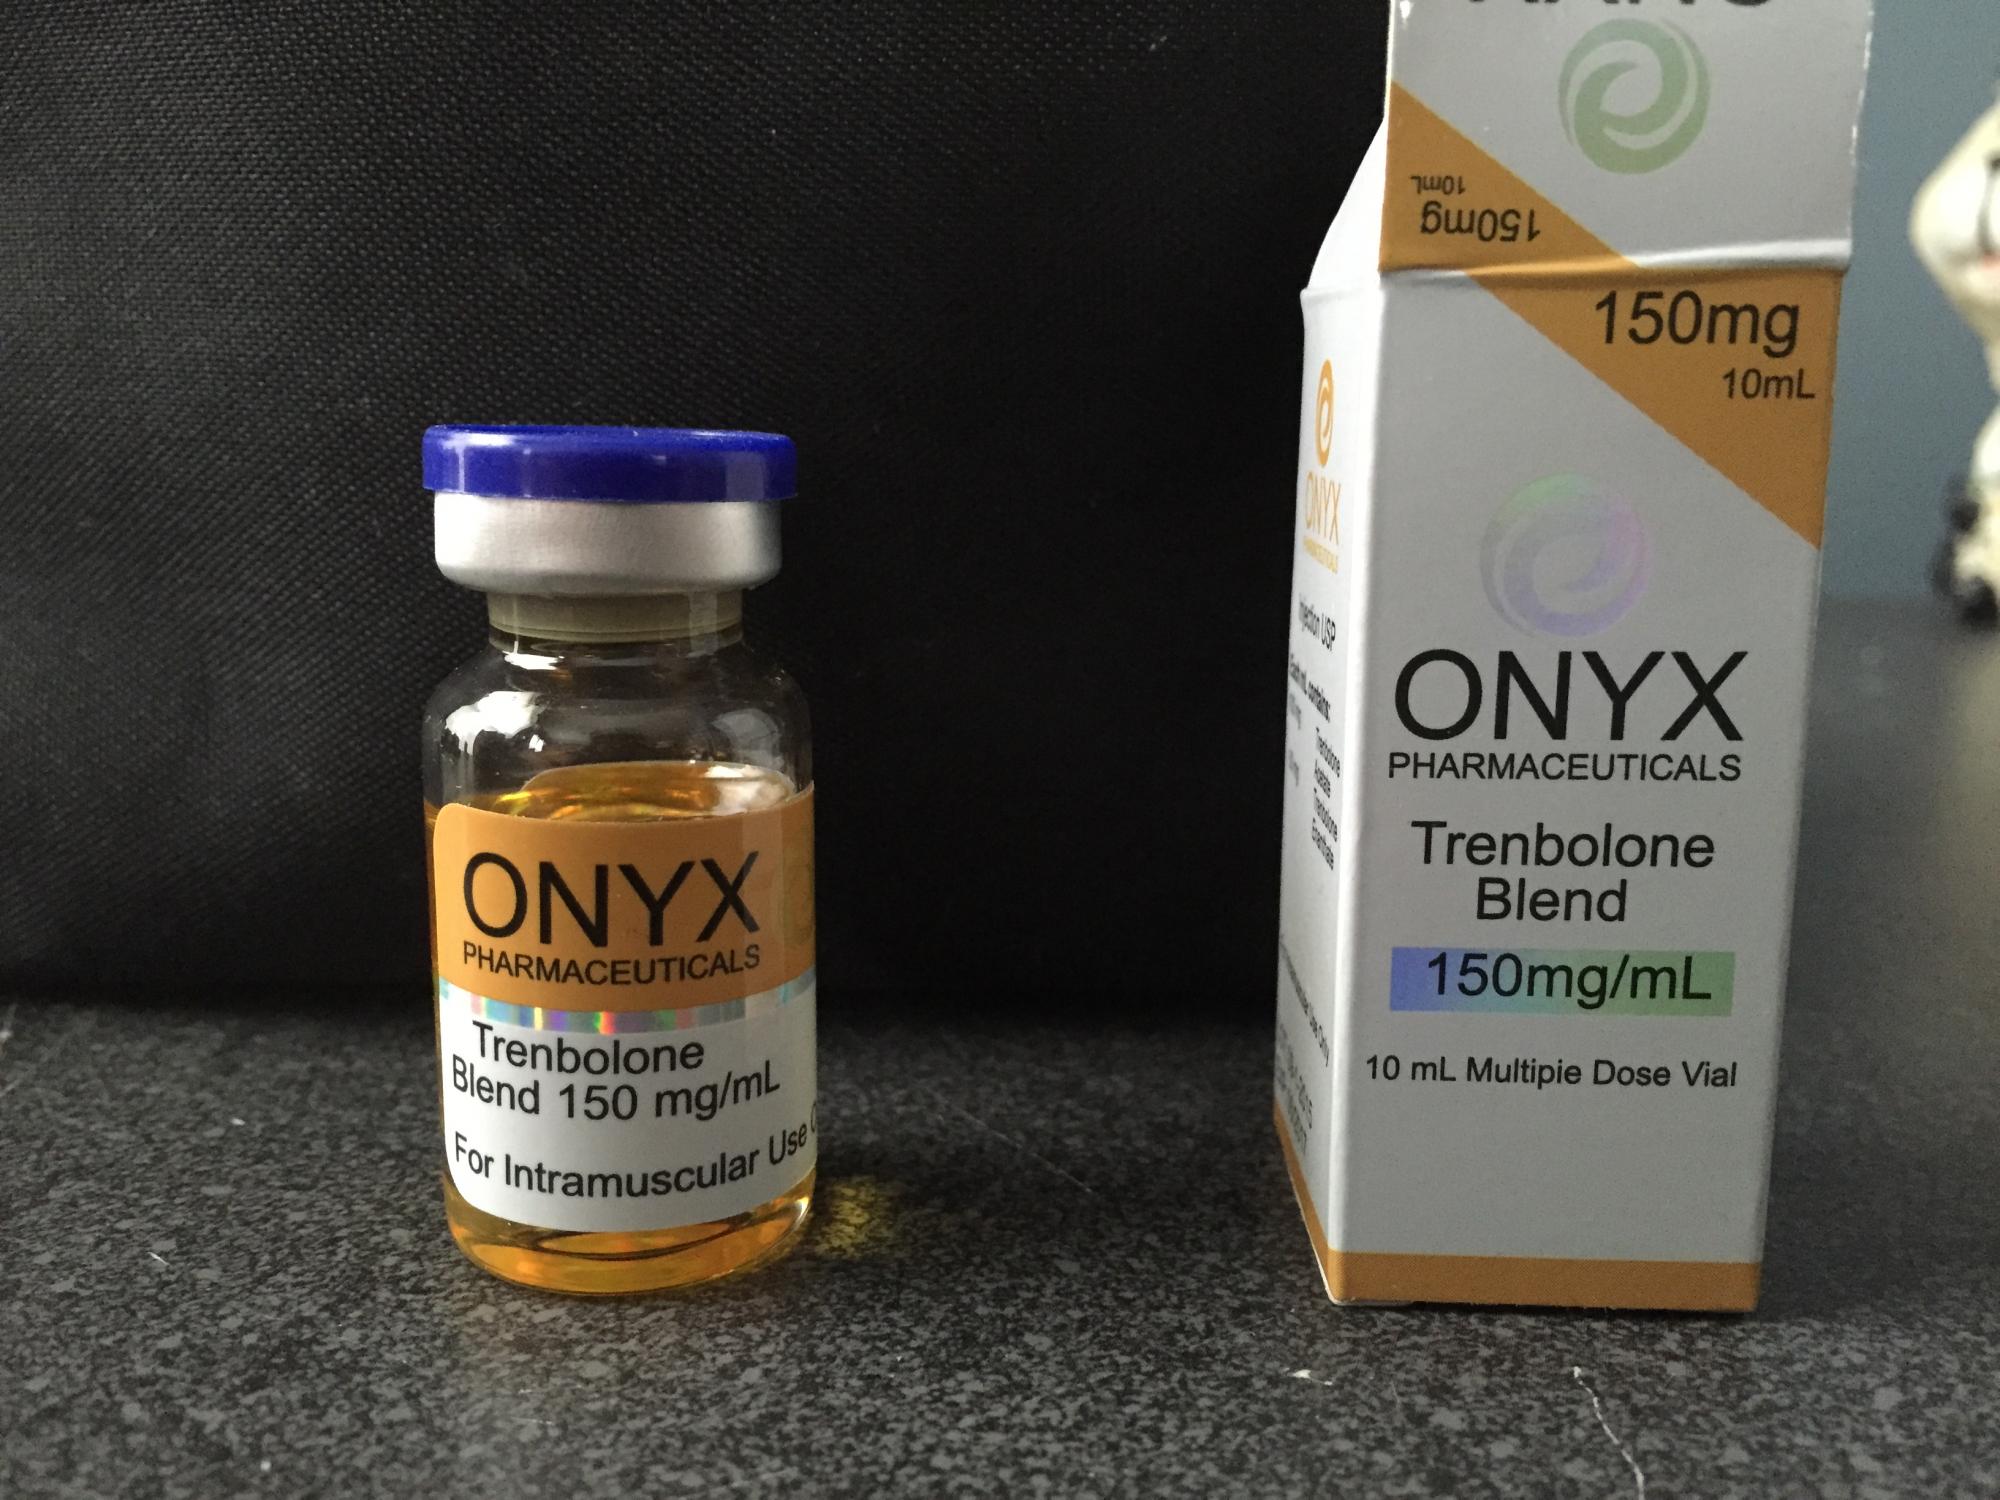 Prednisolone moxifloxacin eye drops price